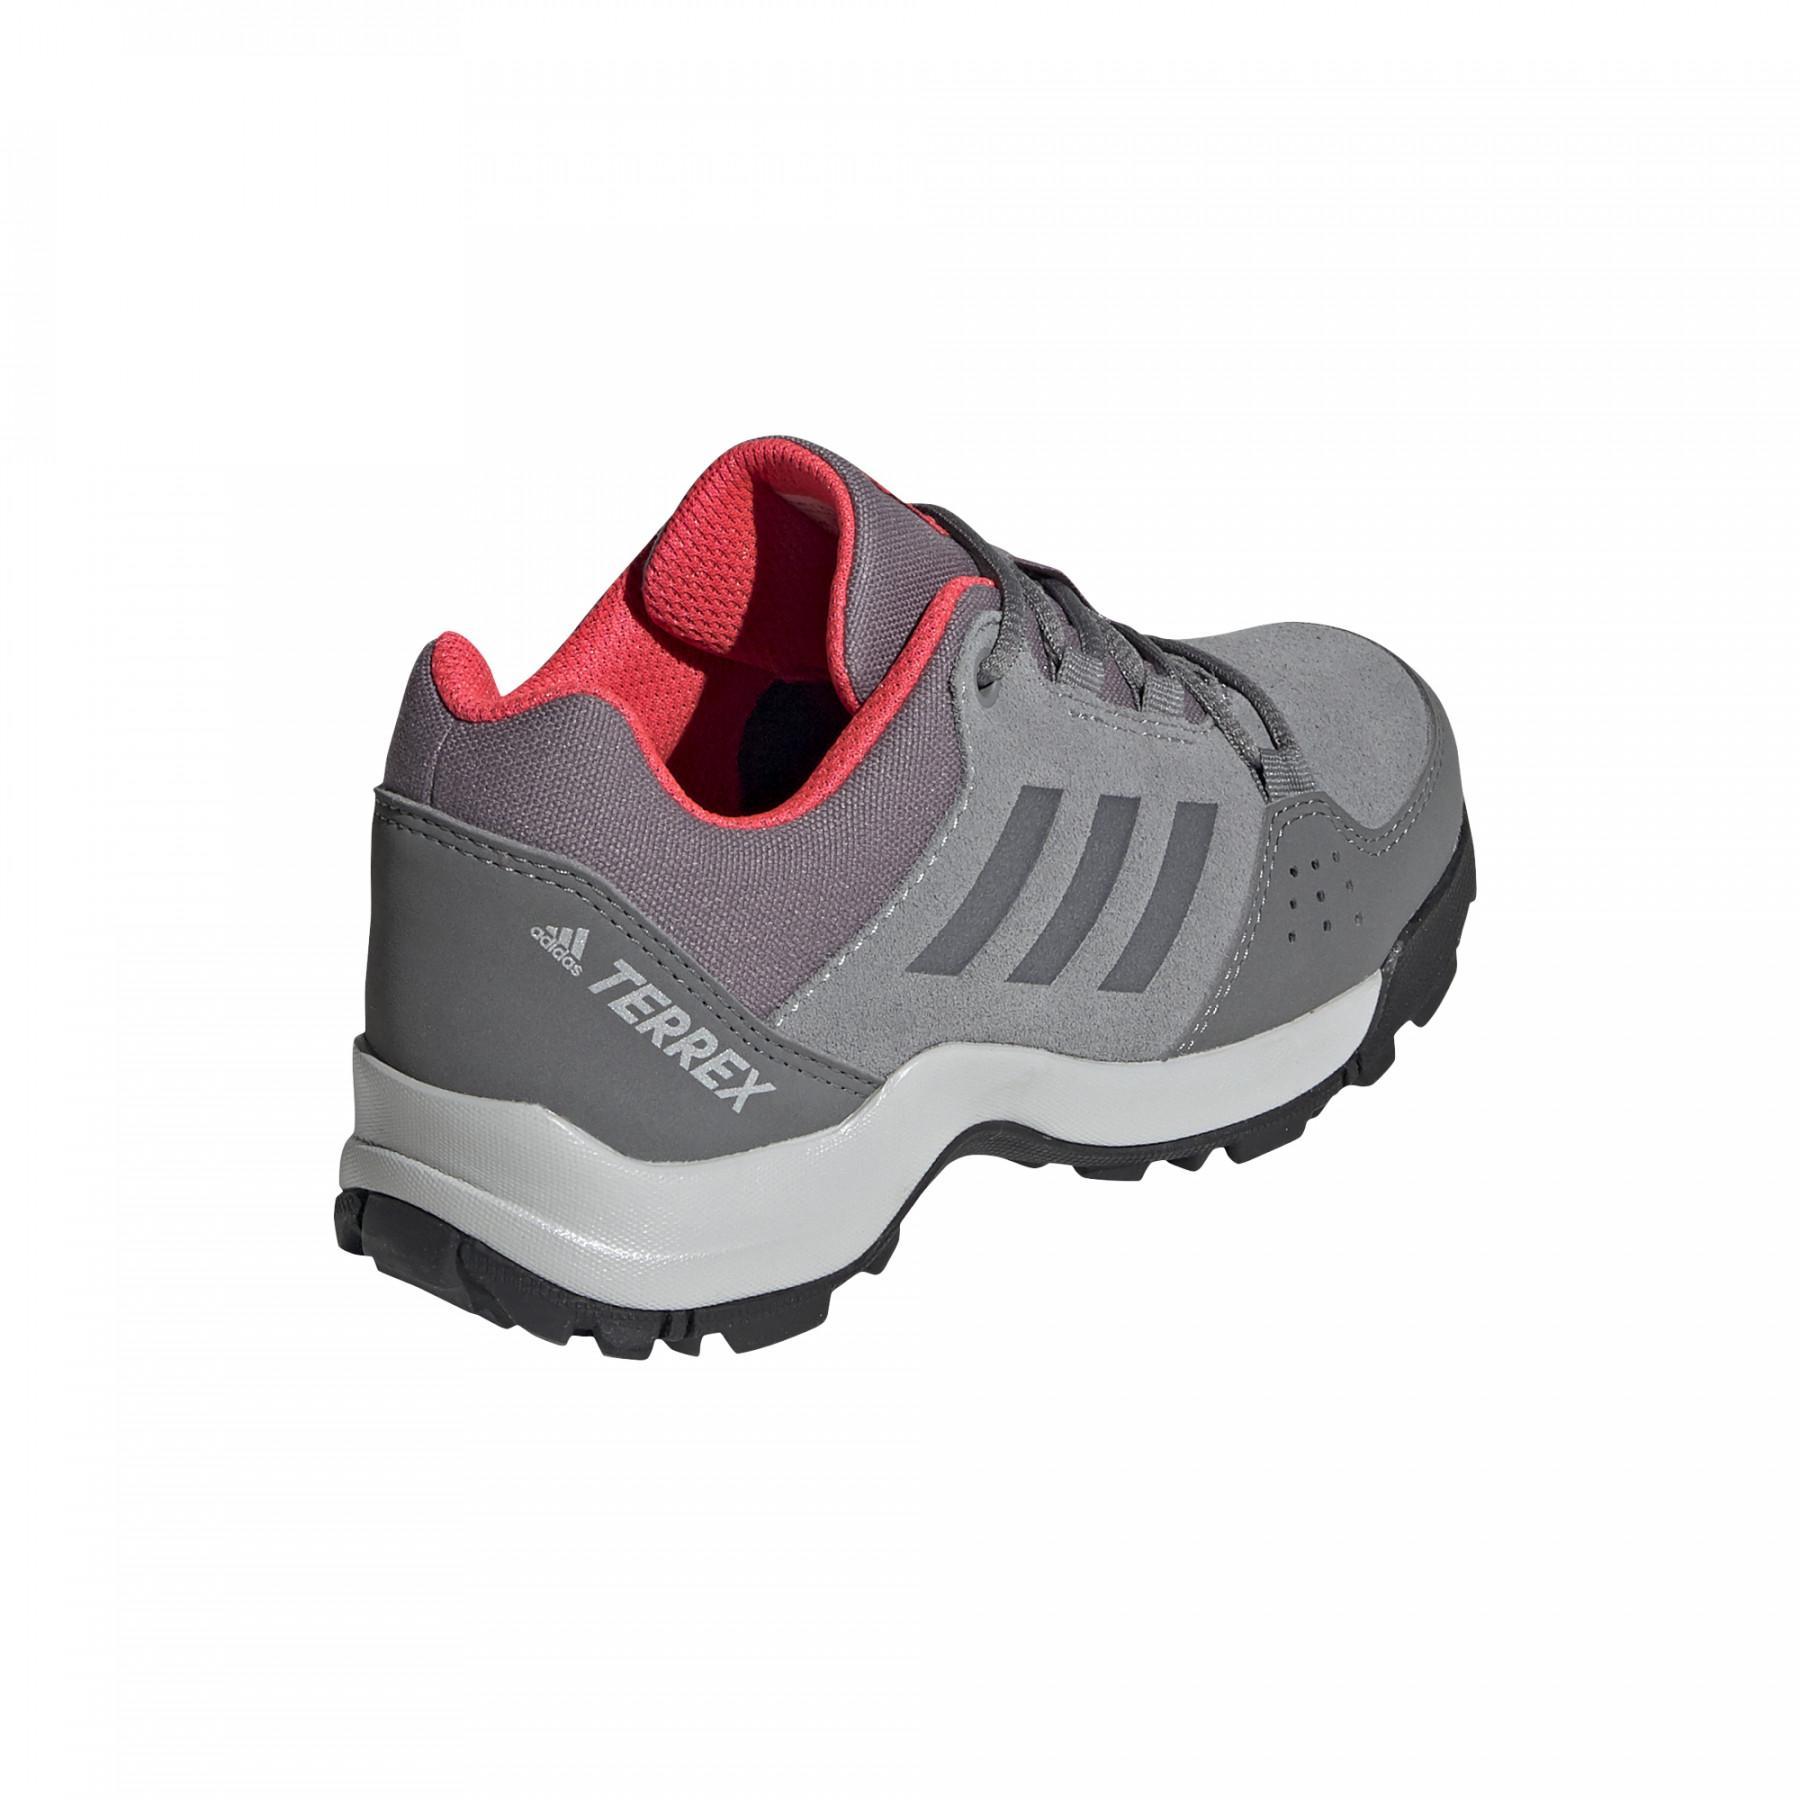 Children's hiking shoes adidas Terrex Hyper Low